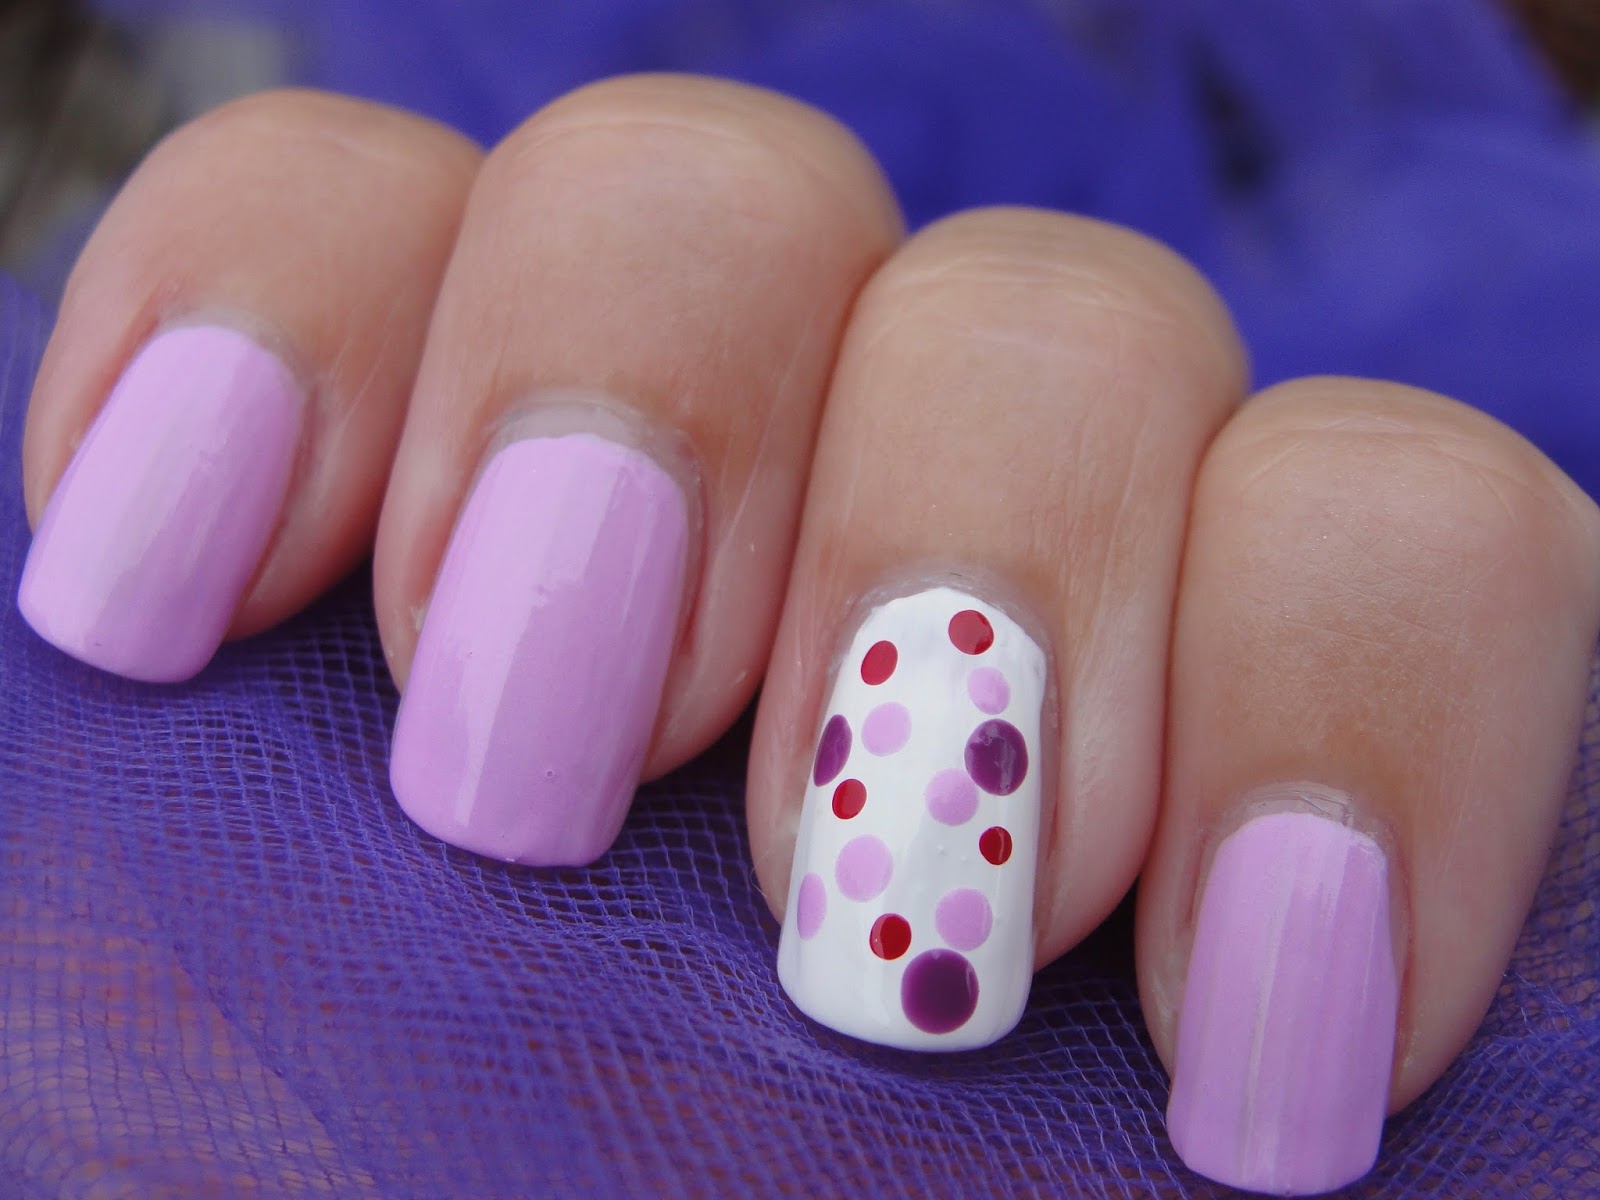 2. Purple polka dot nail designs - wide 4